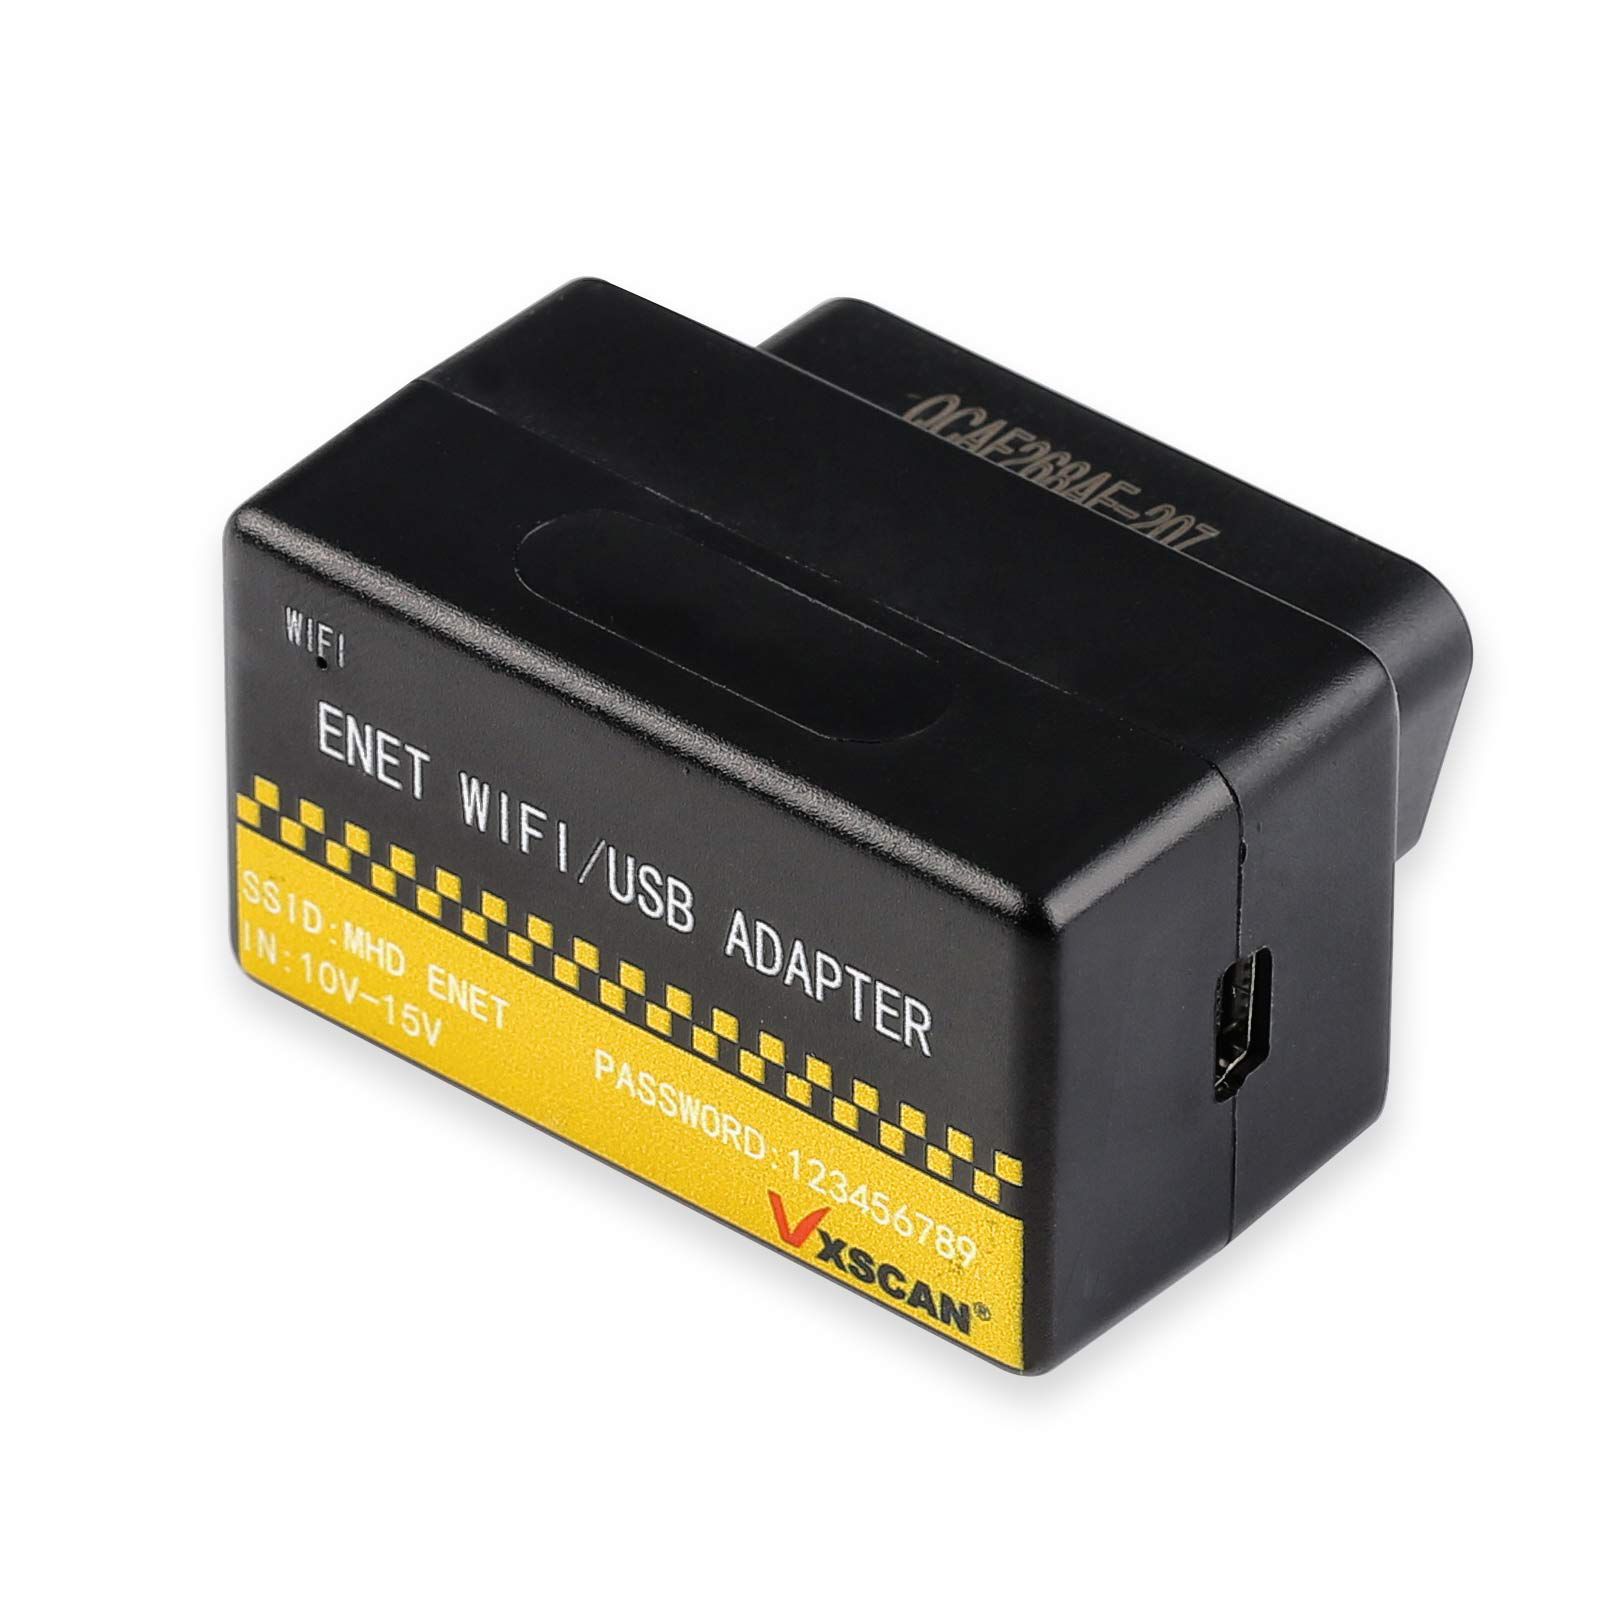 VXSCAN ENET WIFI/USB Adaptador DOIP para VW/VOLVO, BMW F/G-series + Licença para BENZ software W223 C206 213 167